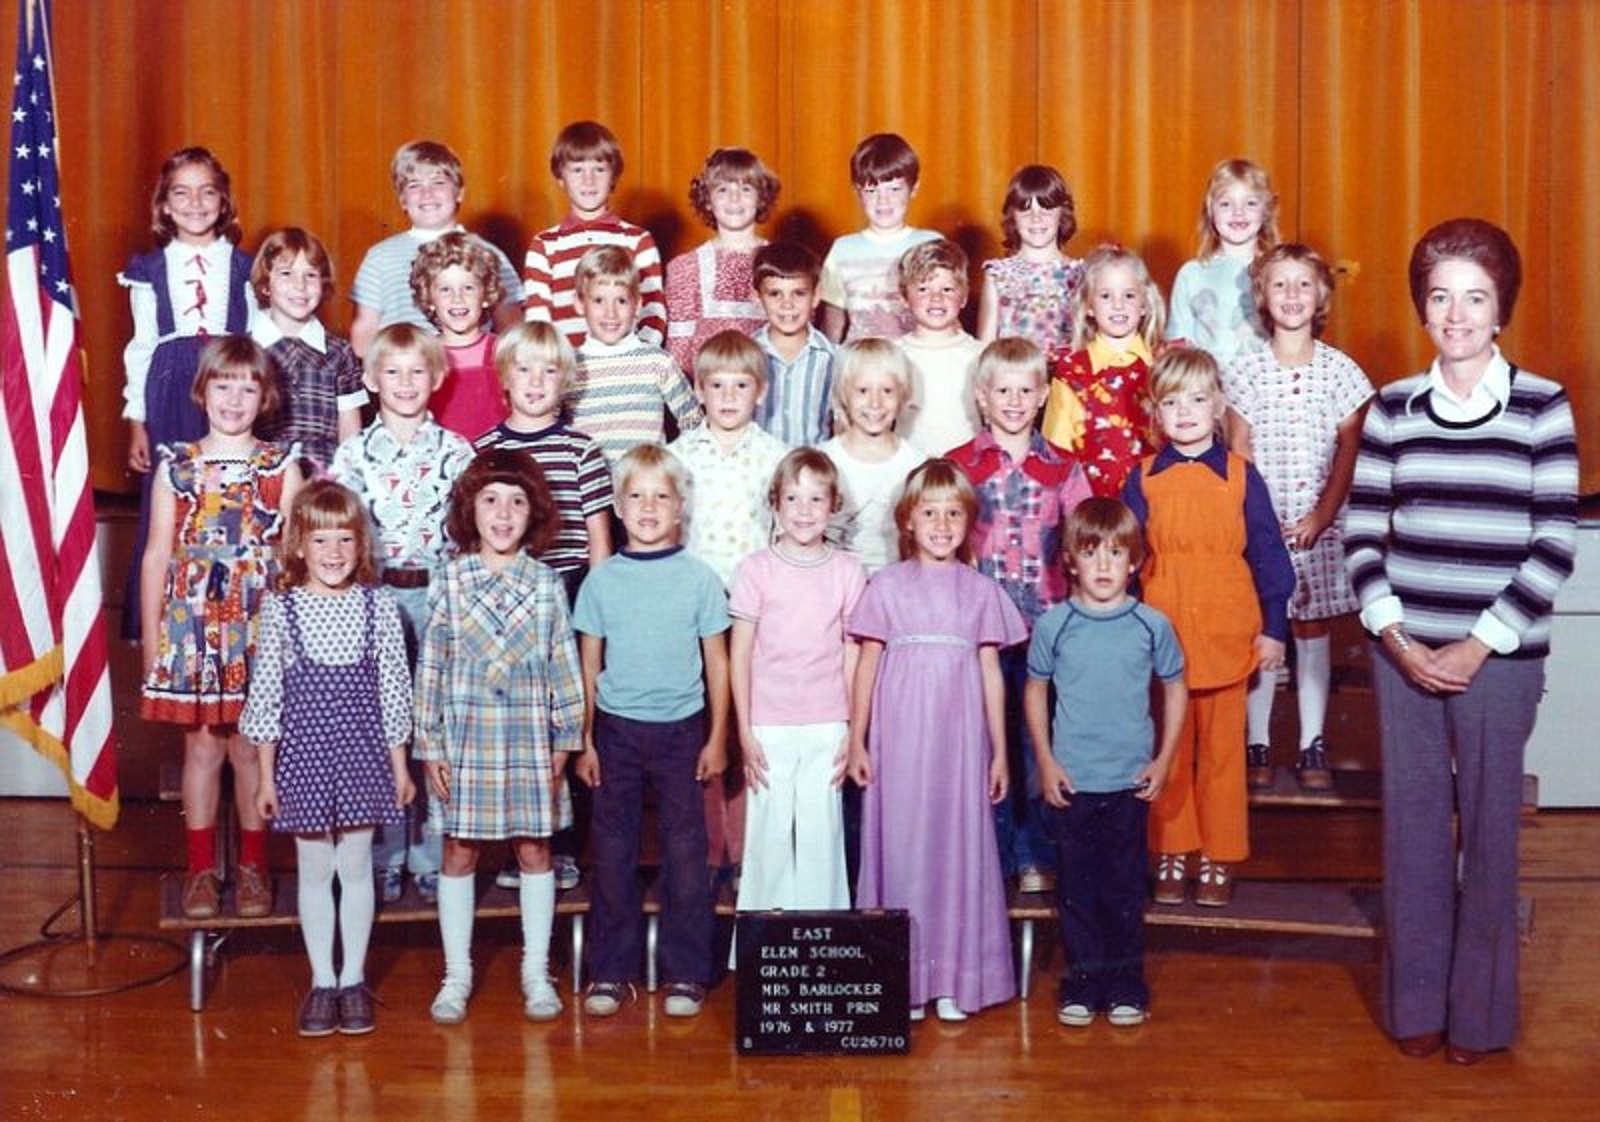 Mrs. Frances Barlocker's 1976-1977 Second grade class at East Elementary School